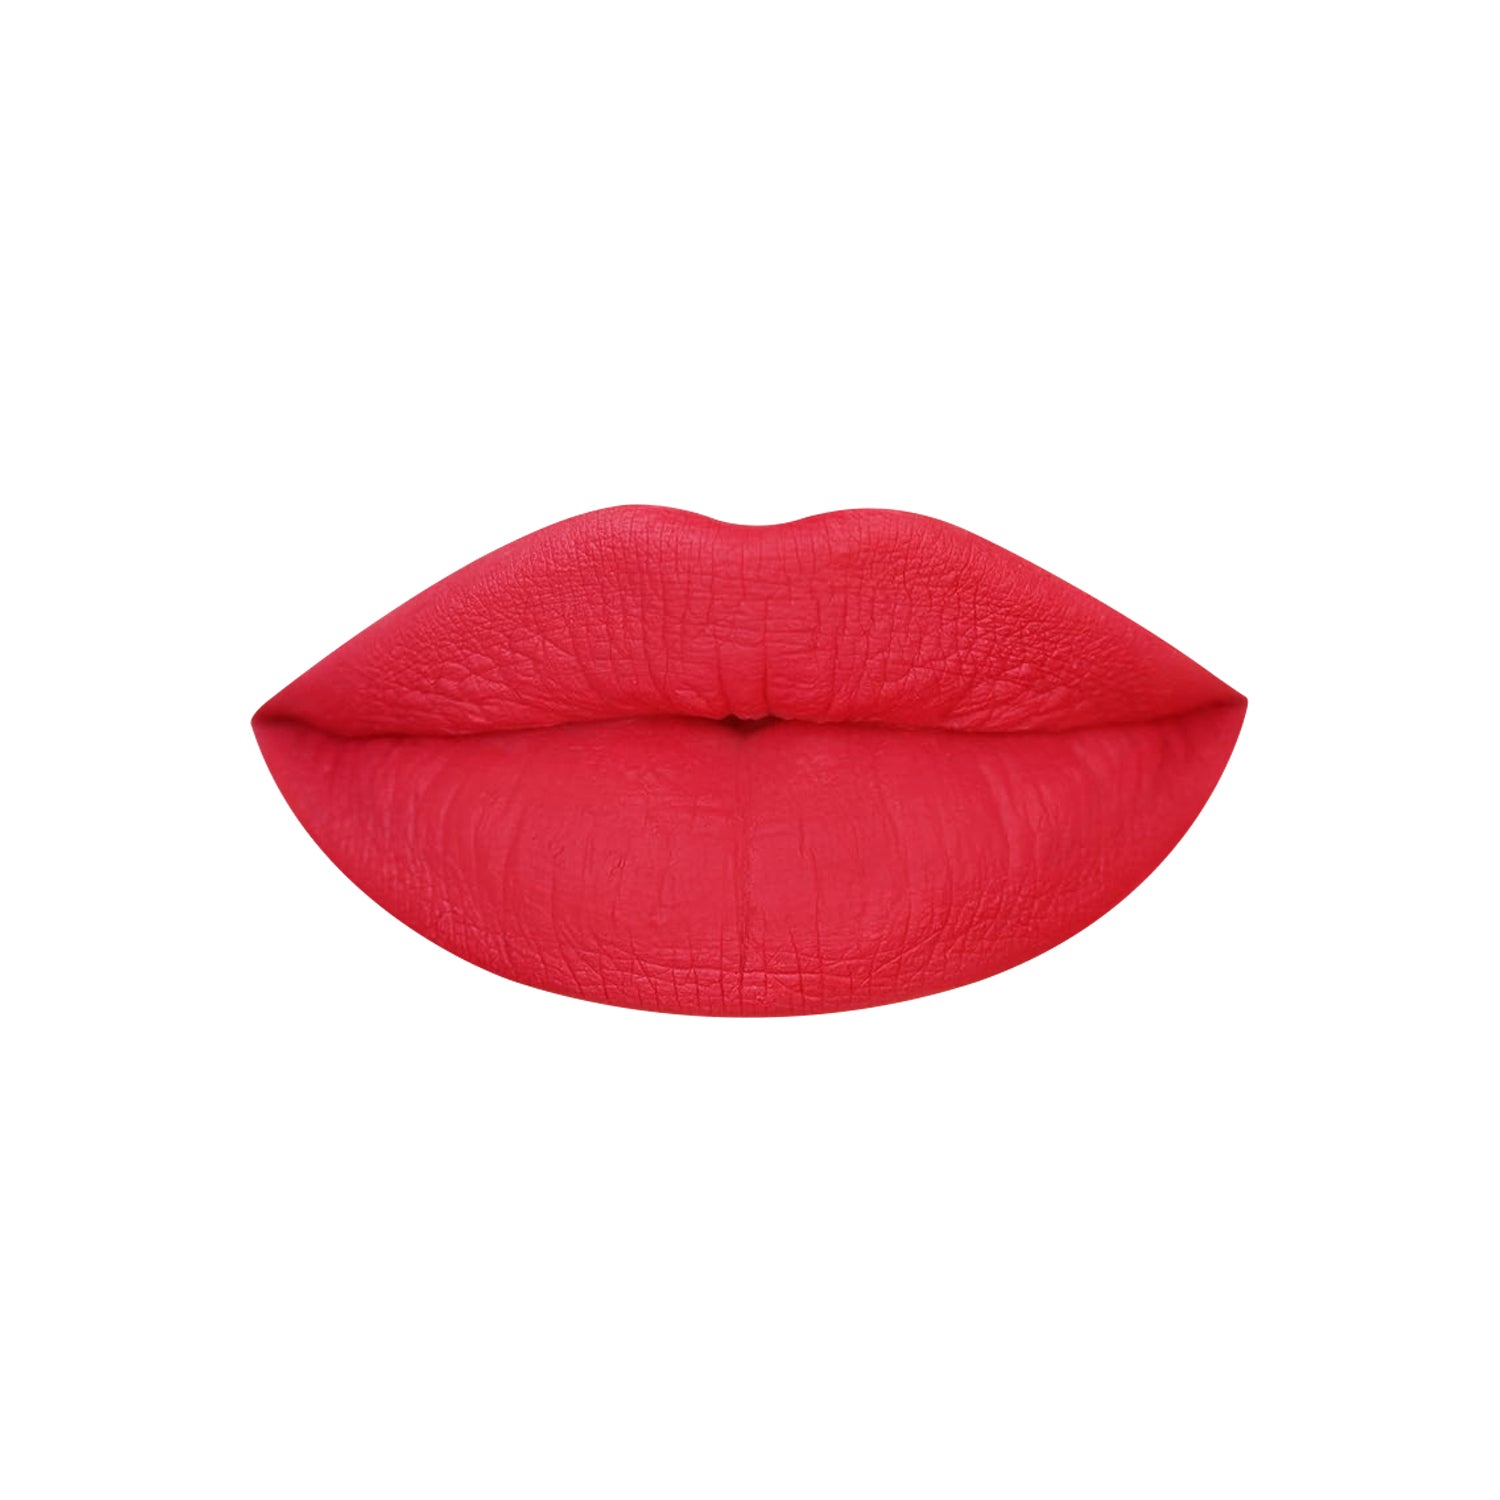 PAC Cosmetics Intimatte Lipstick (4g) #Color_Red Craze